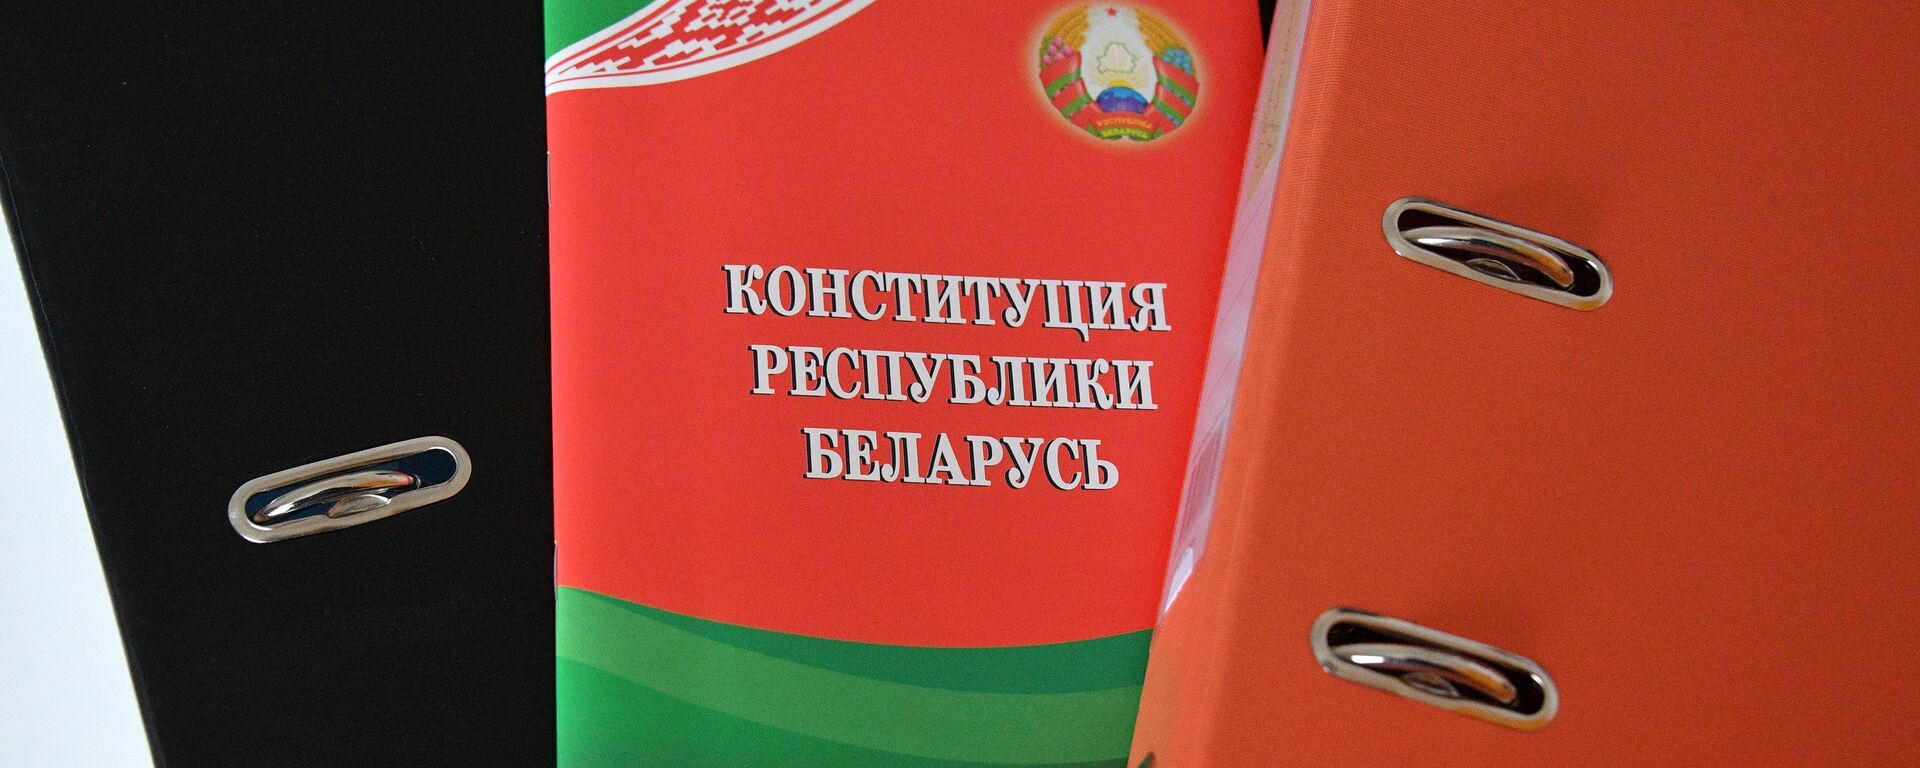 Конституция Республики Беларусь - Sputnik Беларусь, 1920, 15.11.2021